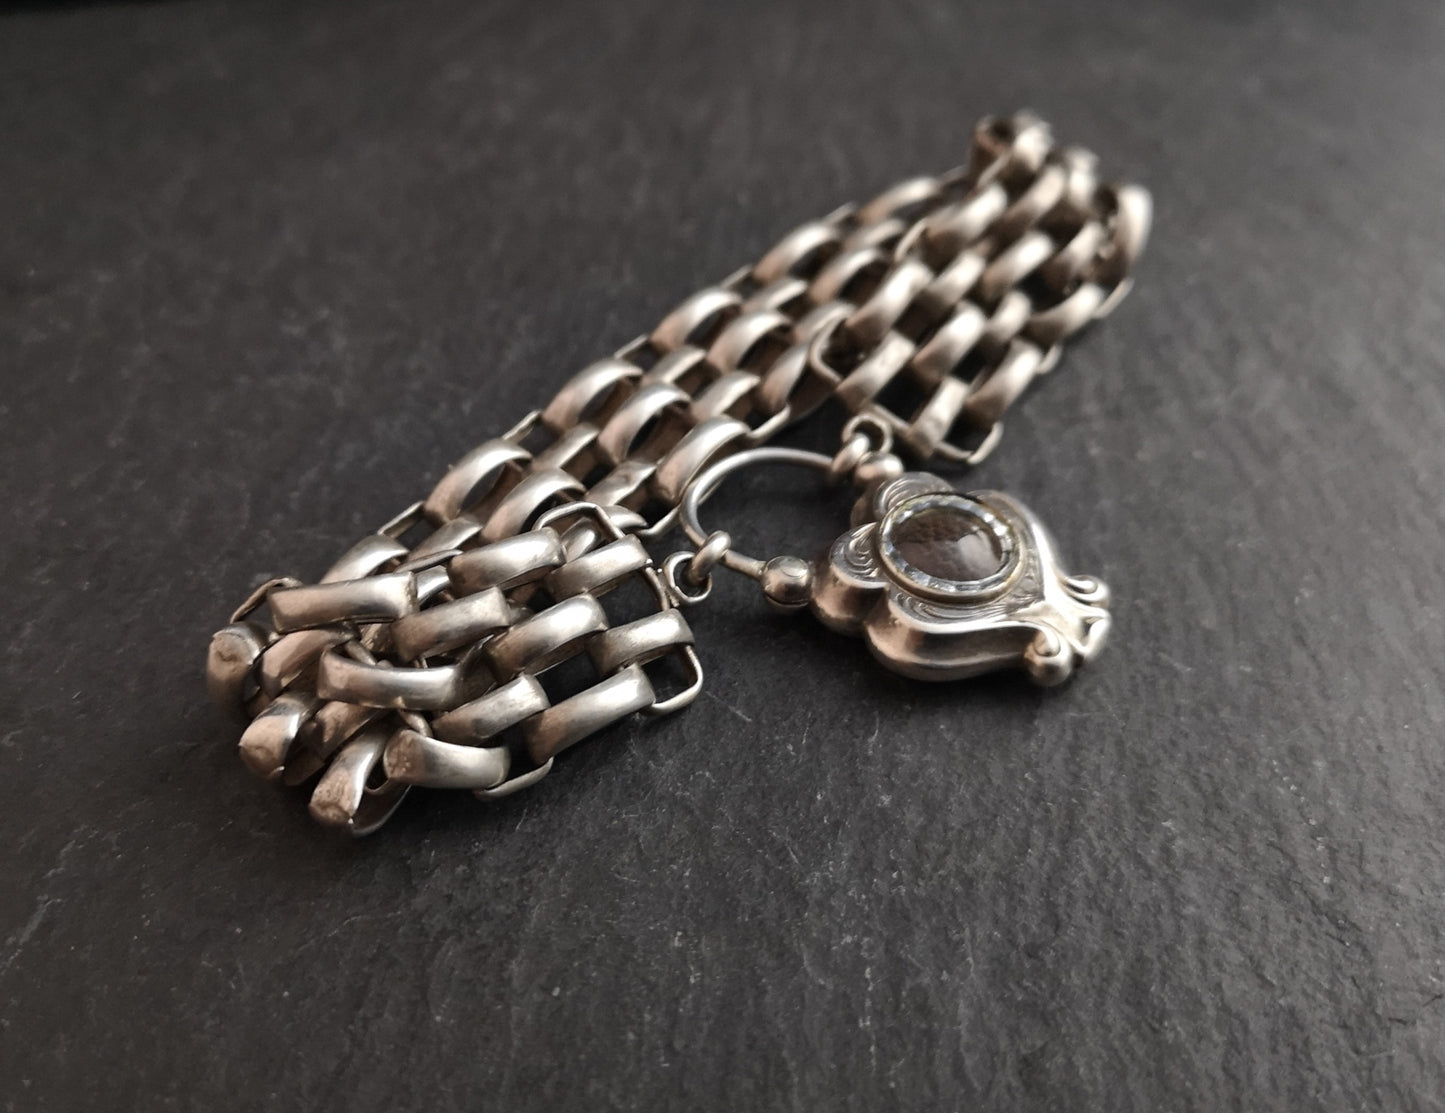 Antique silver mourning bracelet, padlock clasp